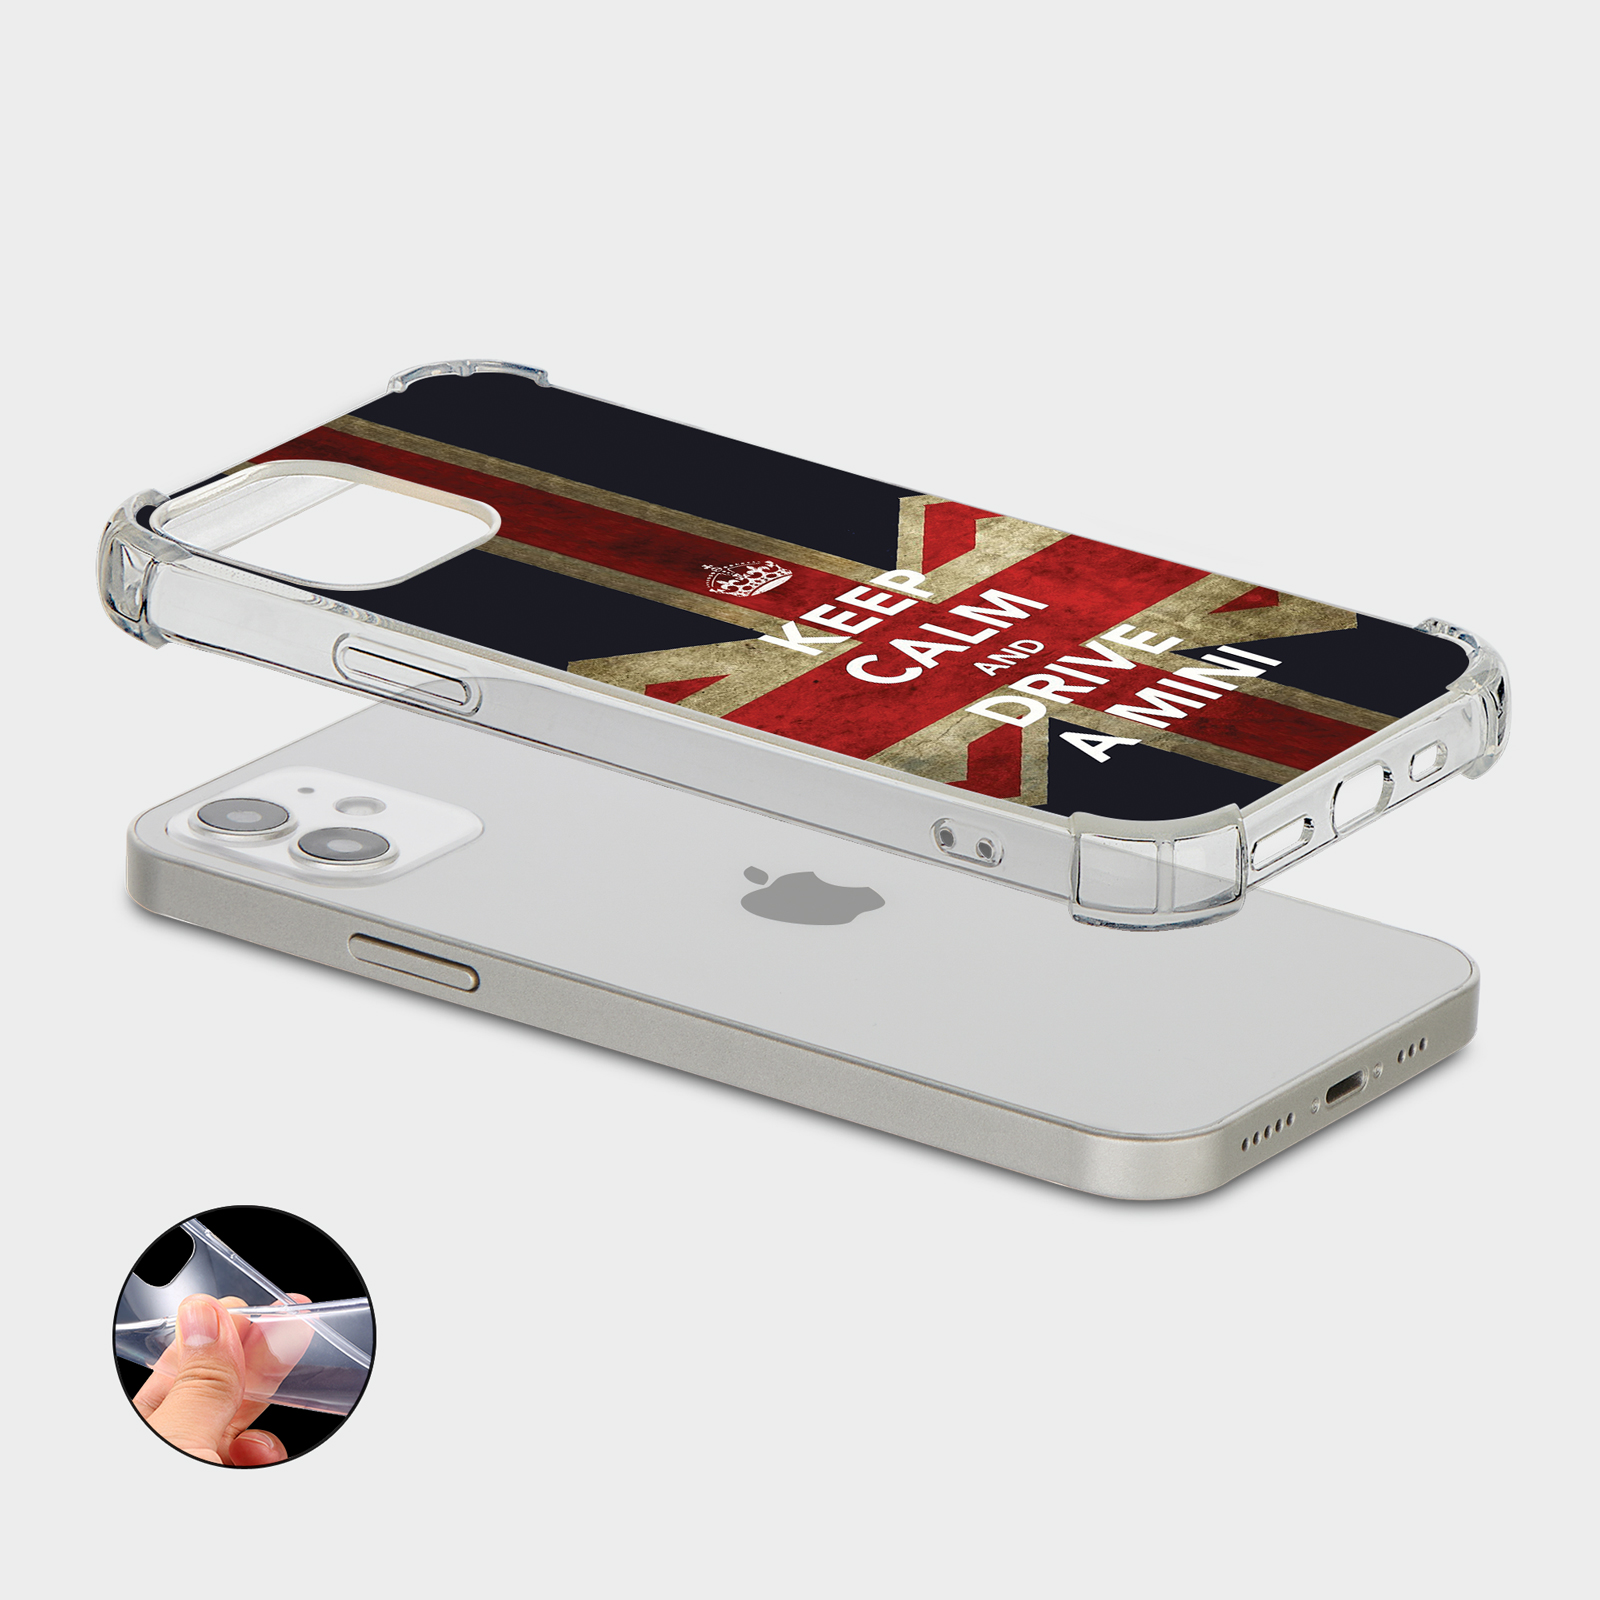 Supreme Classic iPhone 13 Pro Max Case